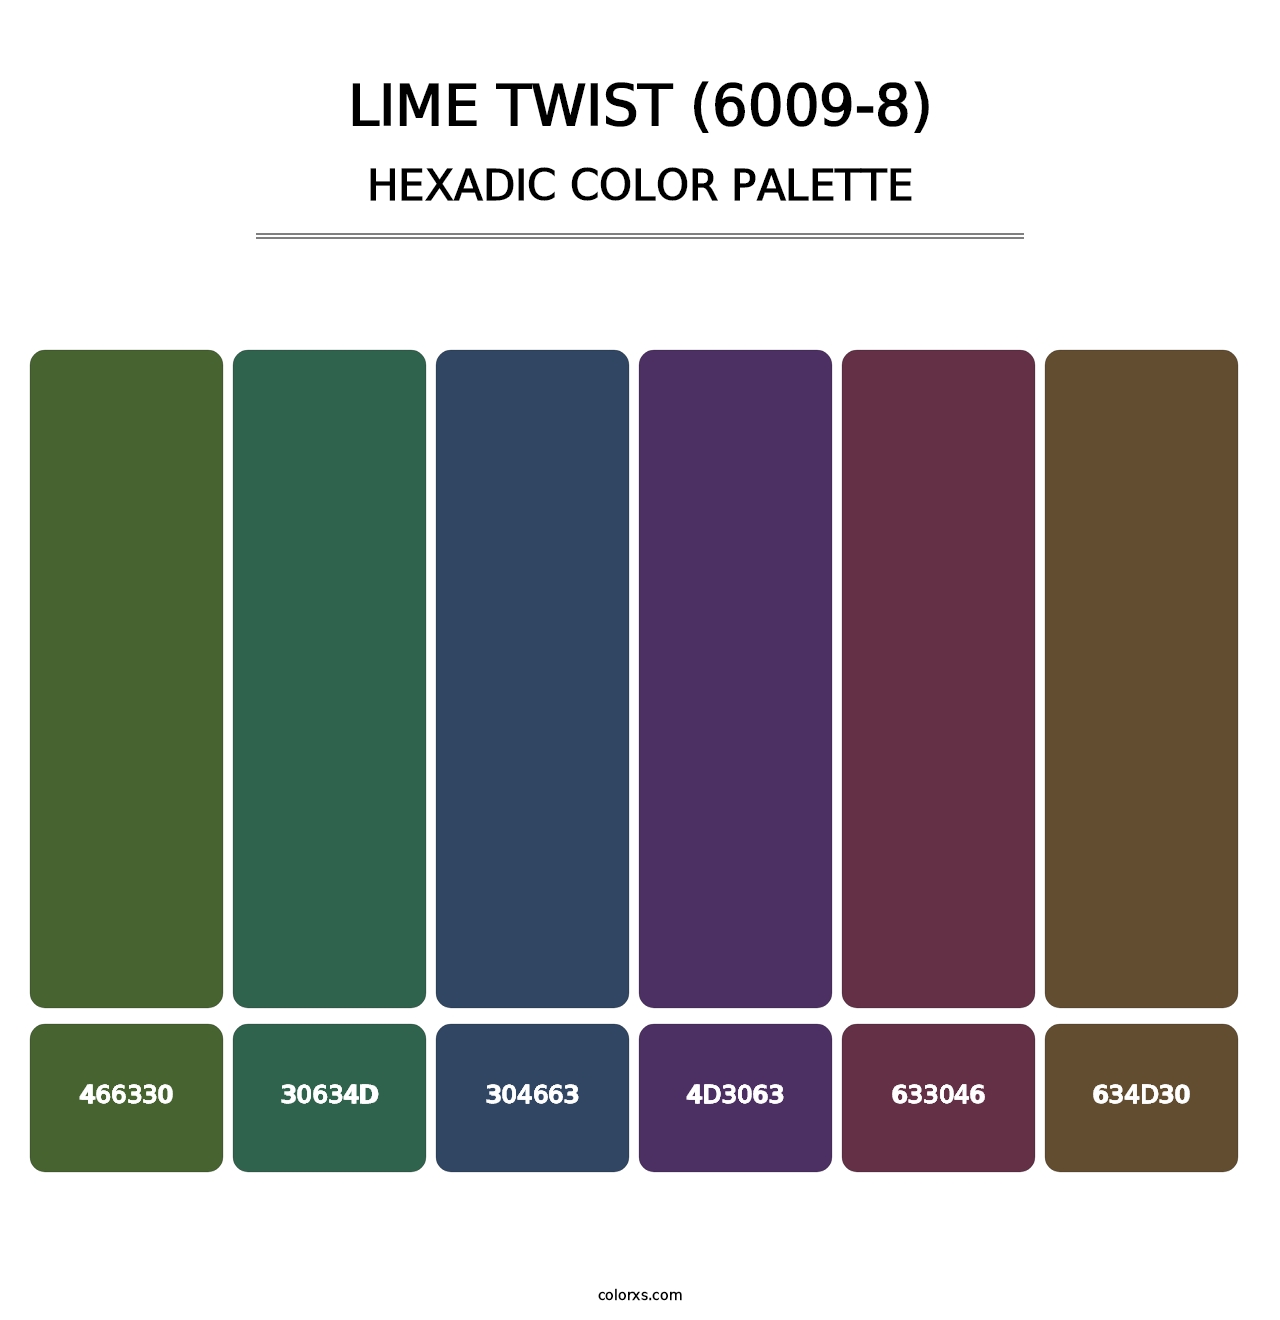 Lime Twist (6009-8) - Hexadic Color Palette